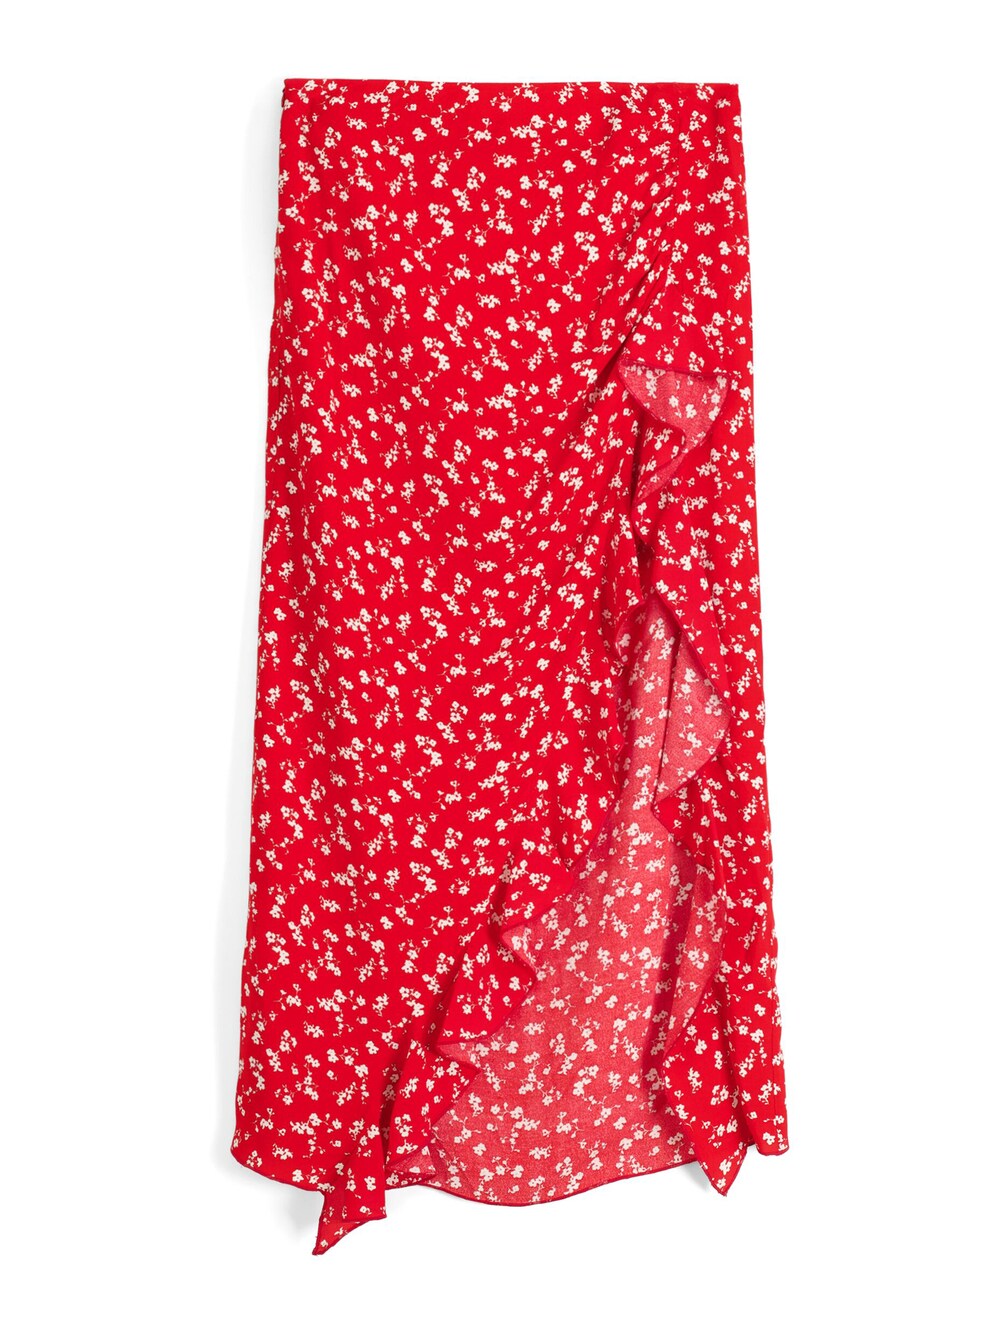 Юбка Bershka, красный юбка bershka яркая 46 размер